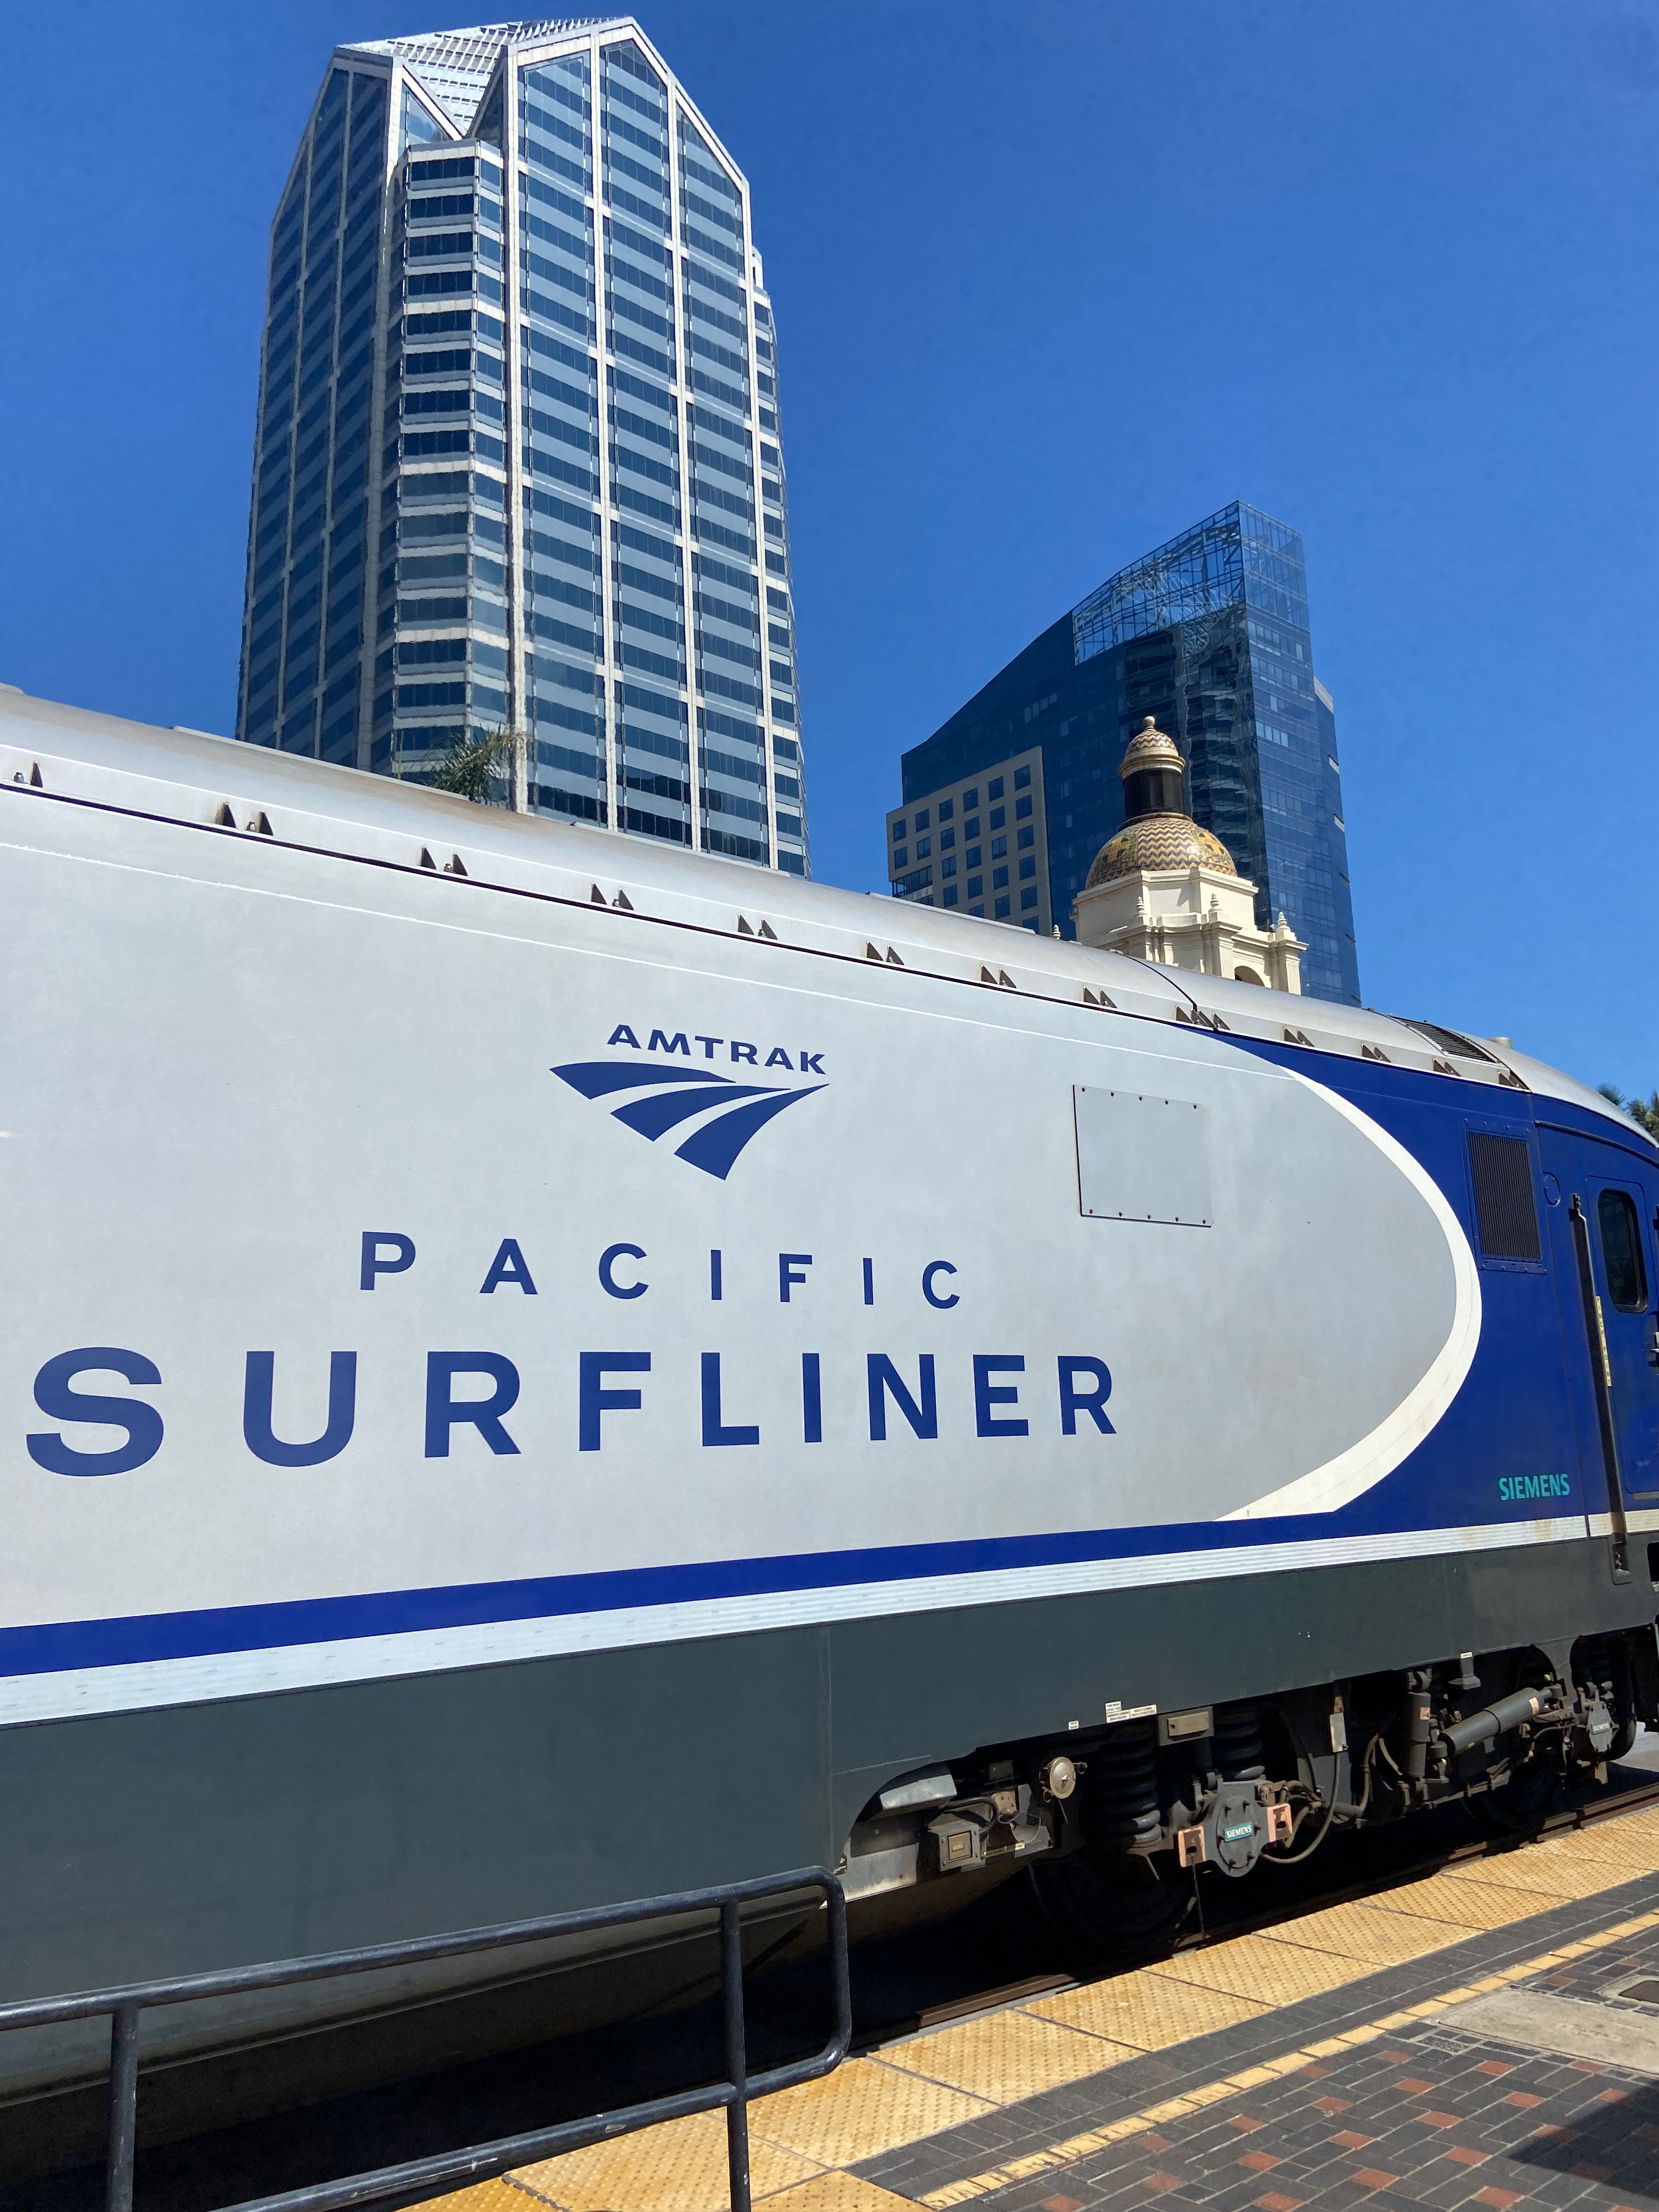 Amtrak Pacific Surfliner train car exterior